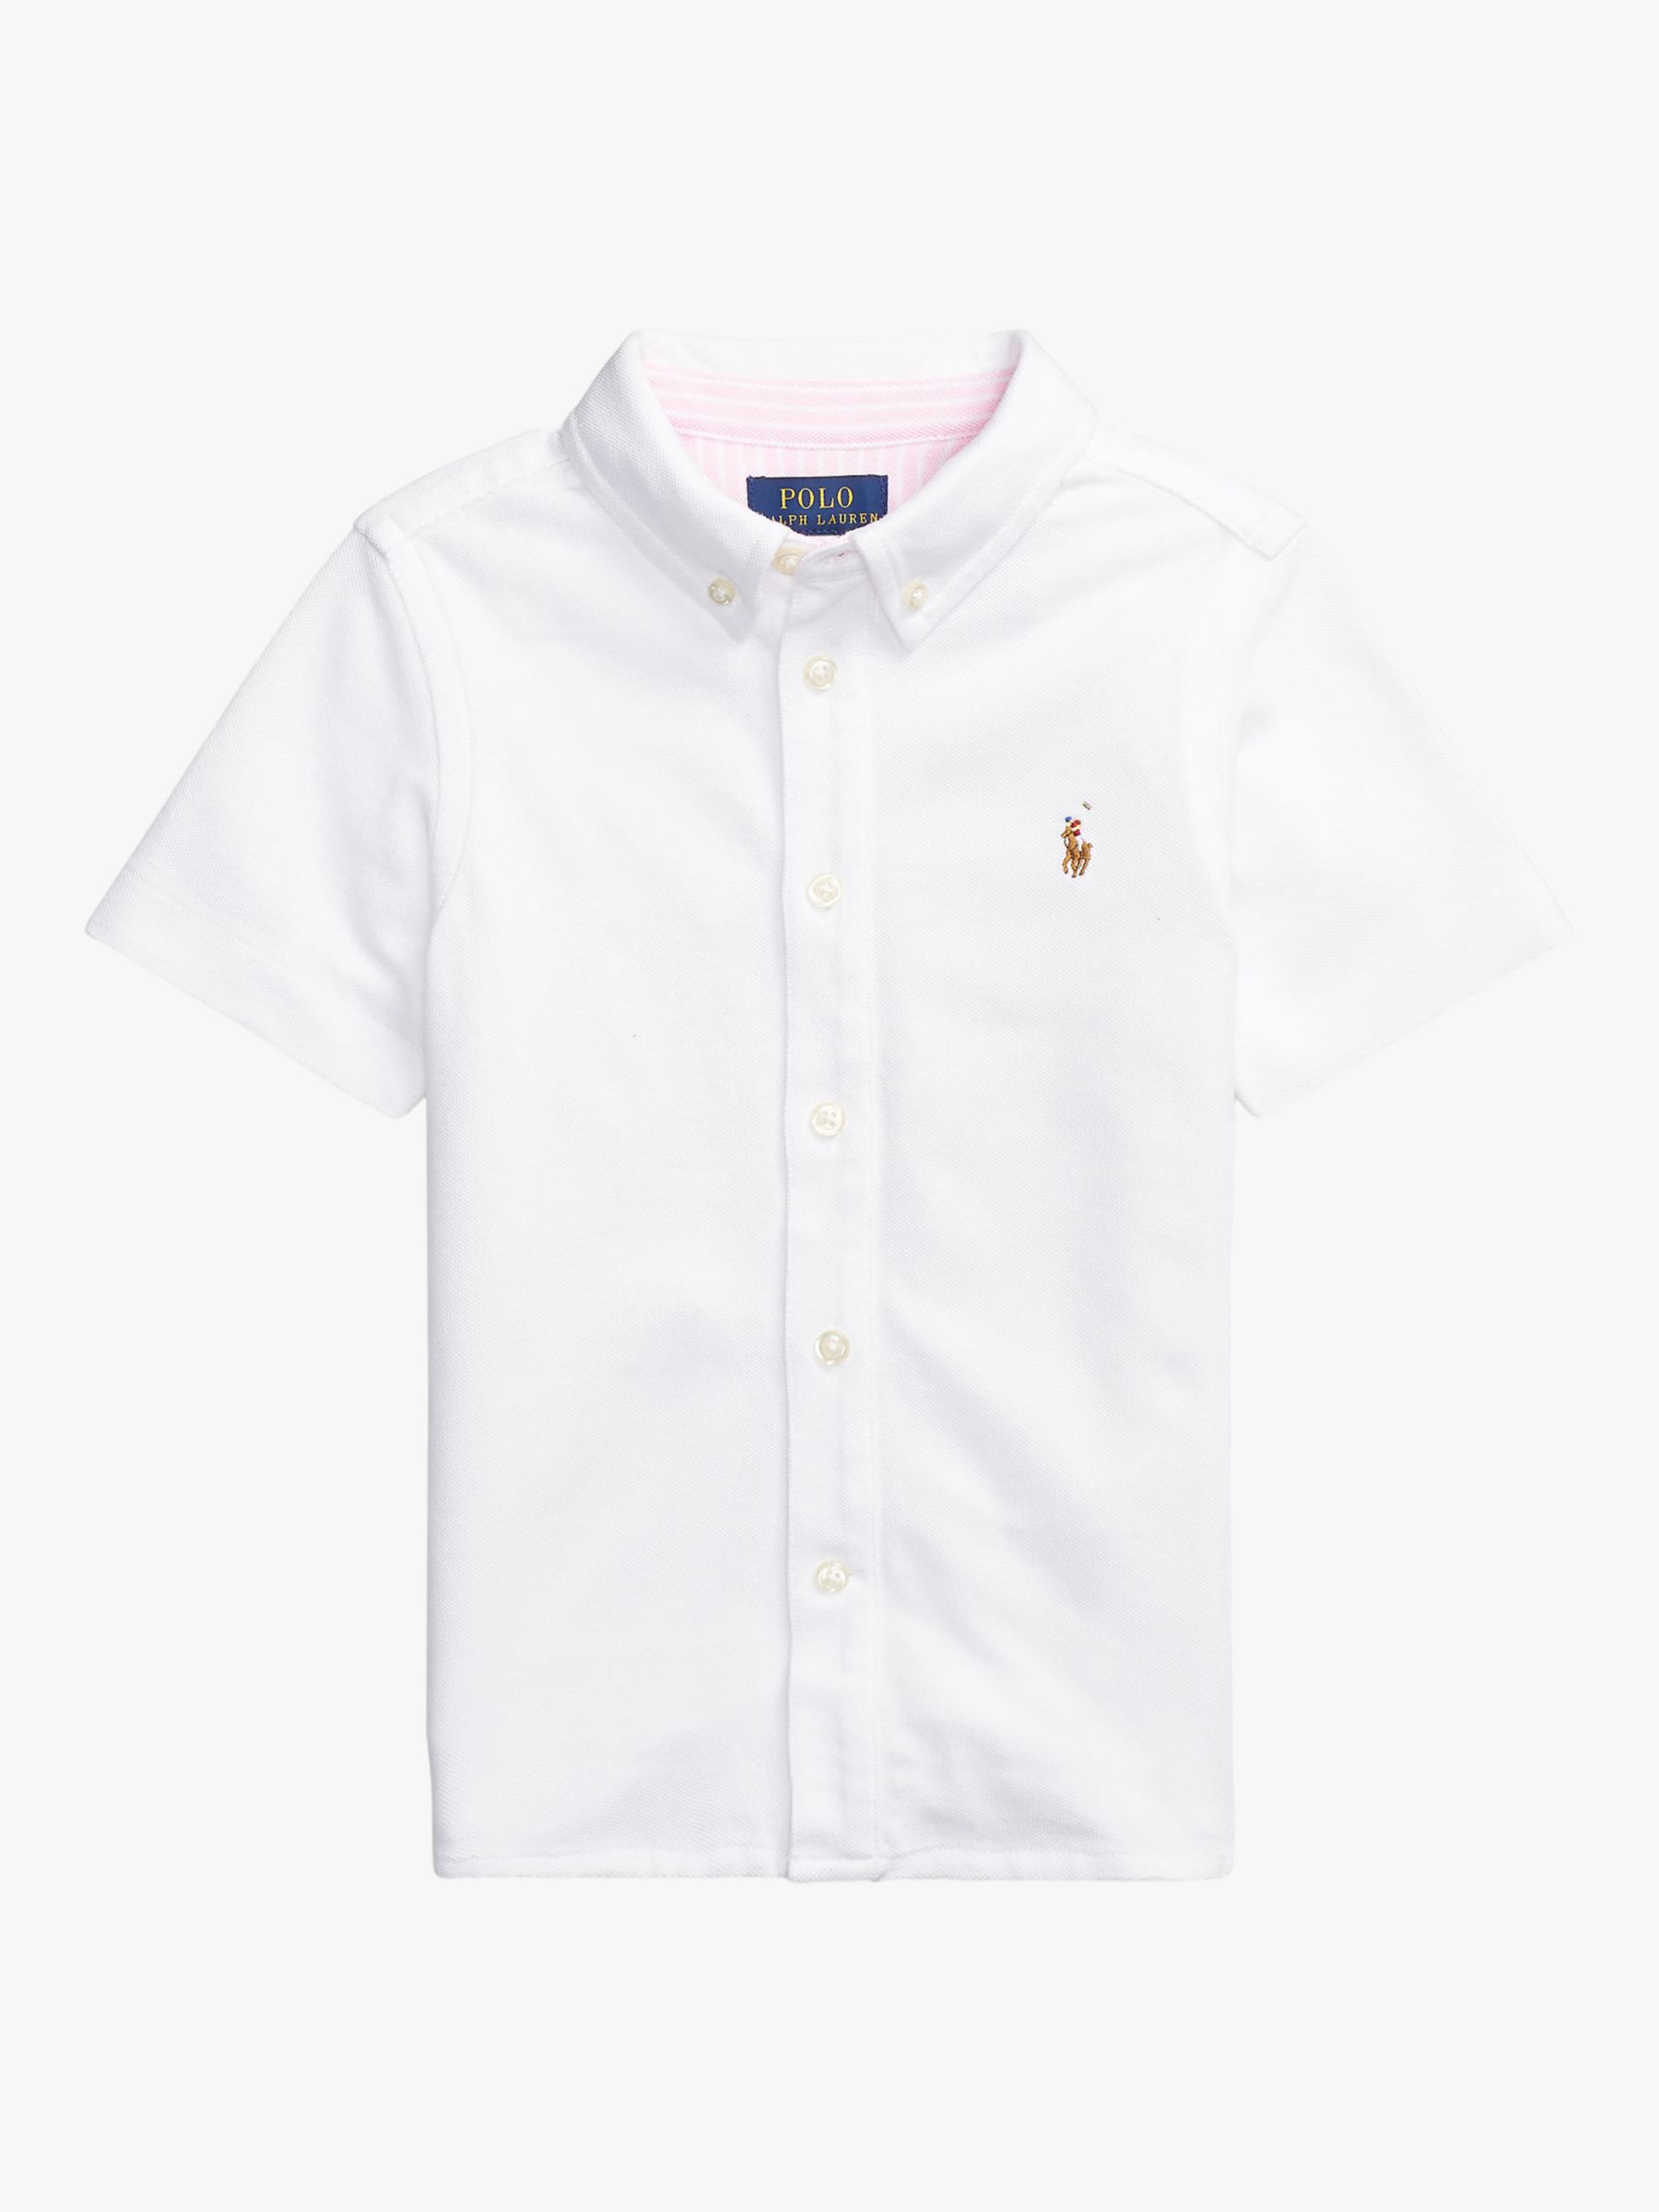 Polo Ralph Lauren Kids' Short Sleeve Shirt, White at John Lewis & Partners